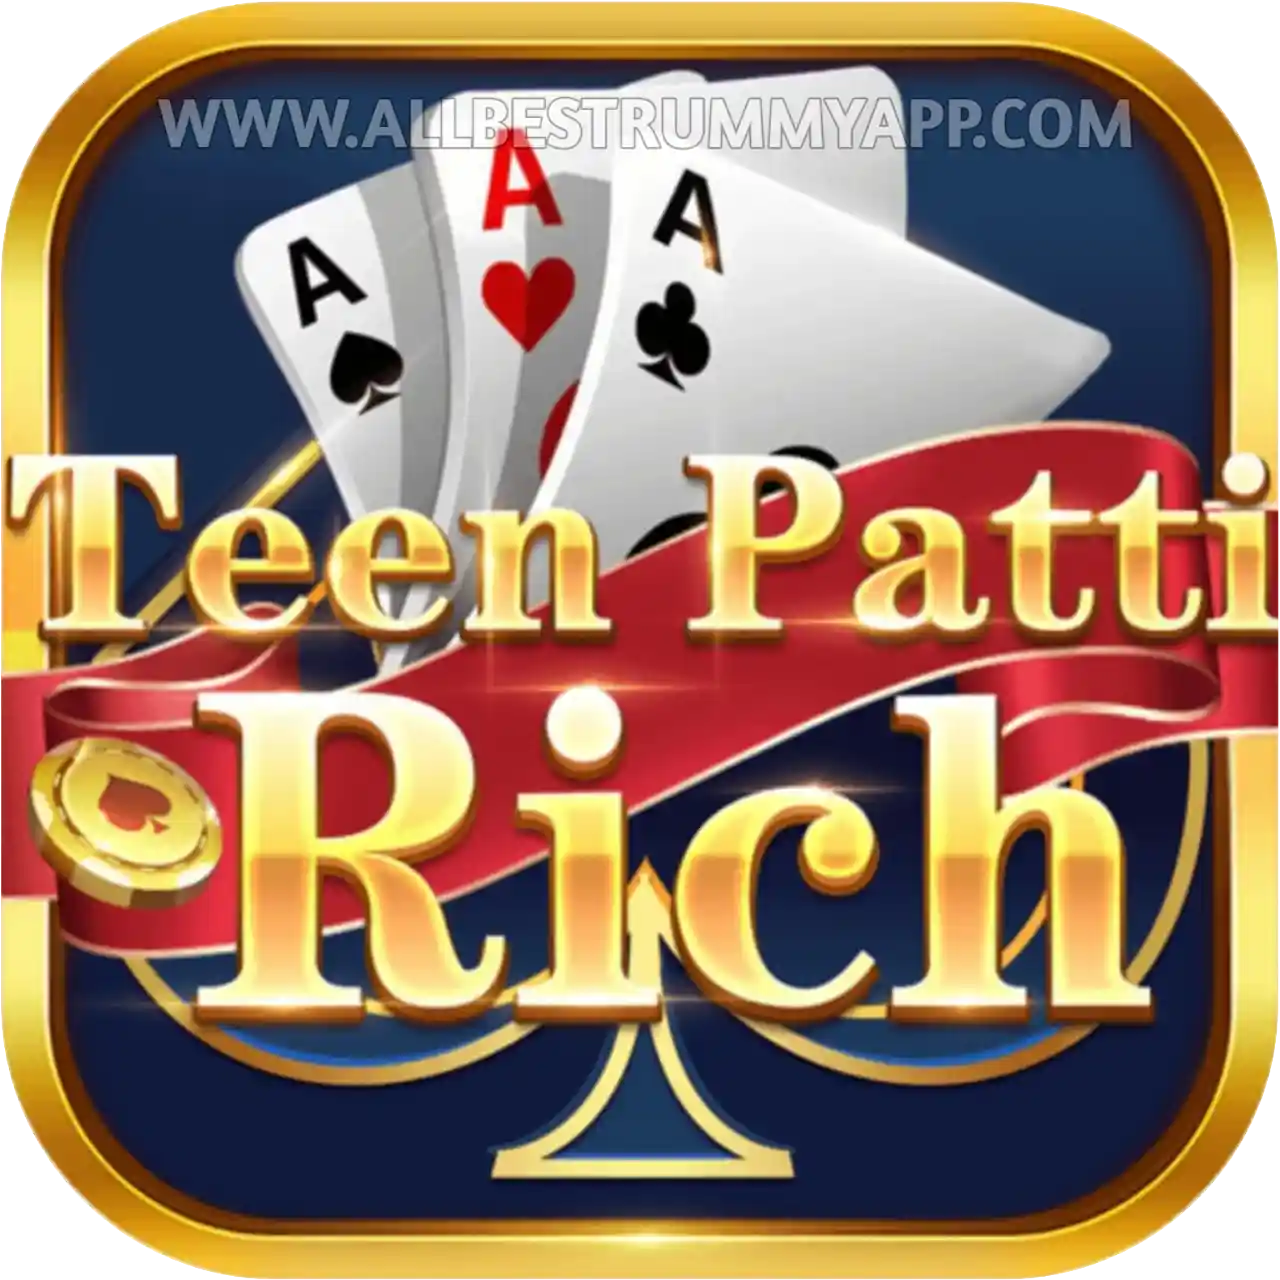 Teen Patti Rich App - All Best Rummy App